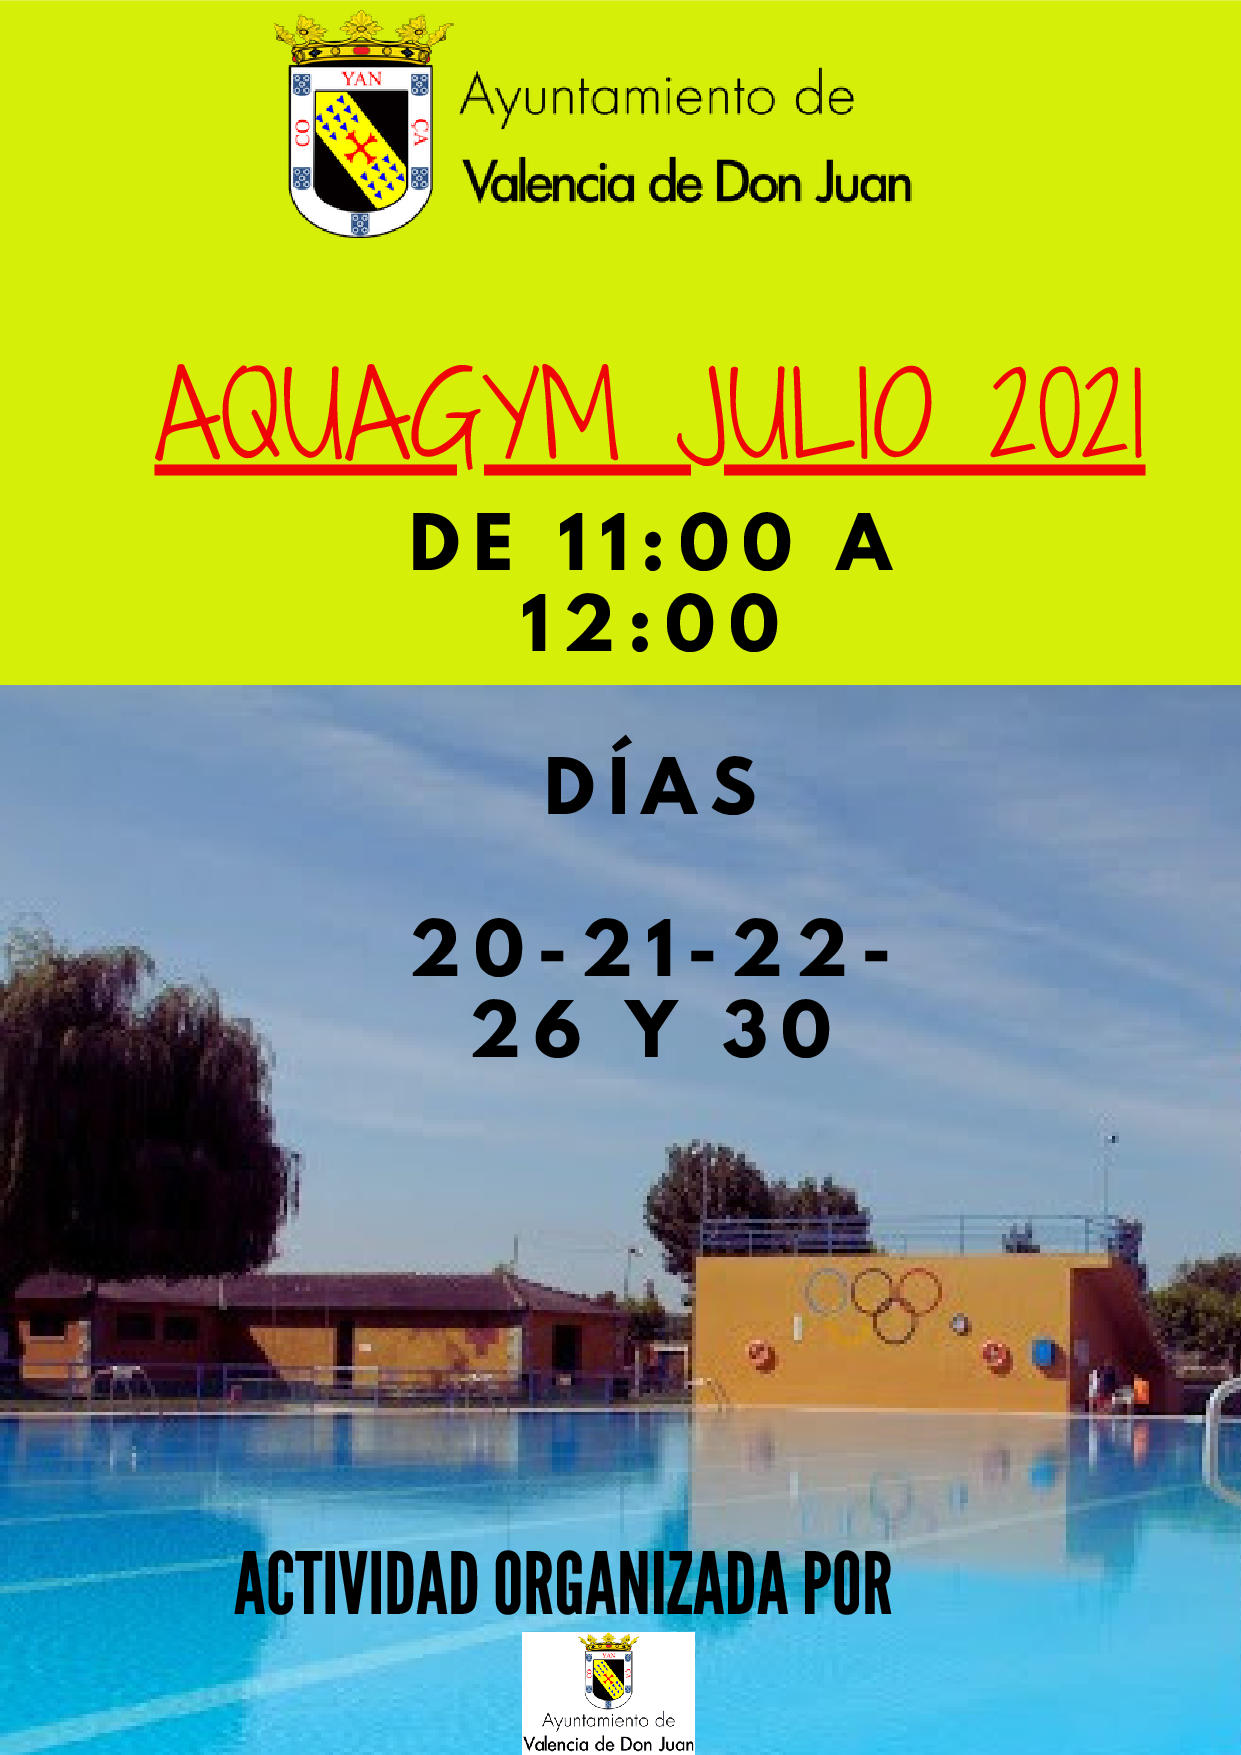 Aquagym julio 2021